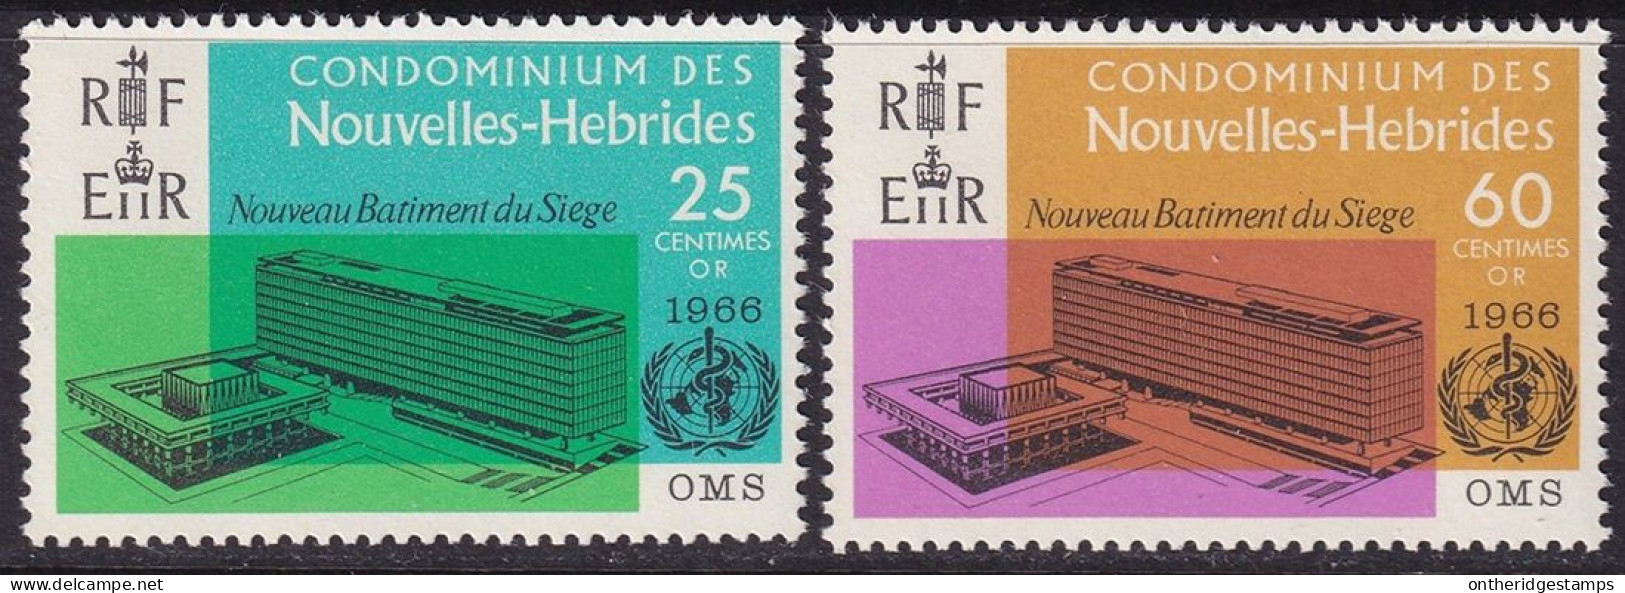 New Hebrides French 1966 Sc 134-5 Yt 245-6 Set MNH** - Nuevos